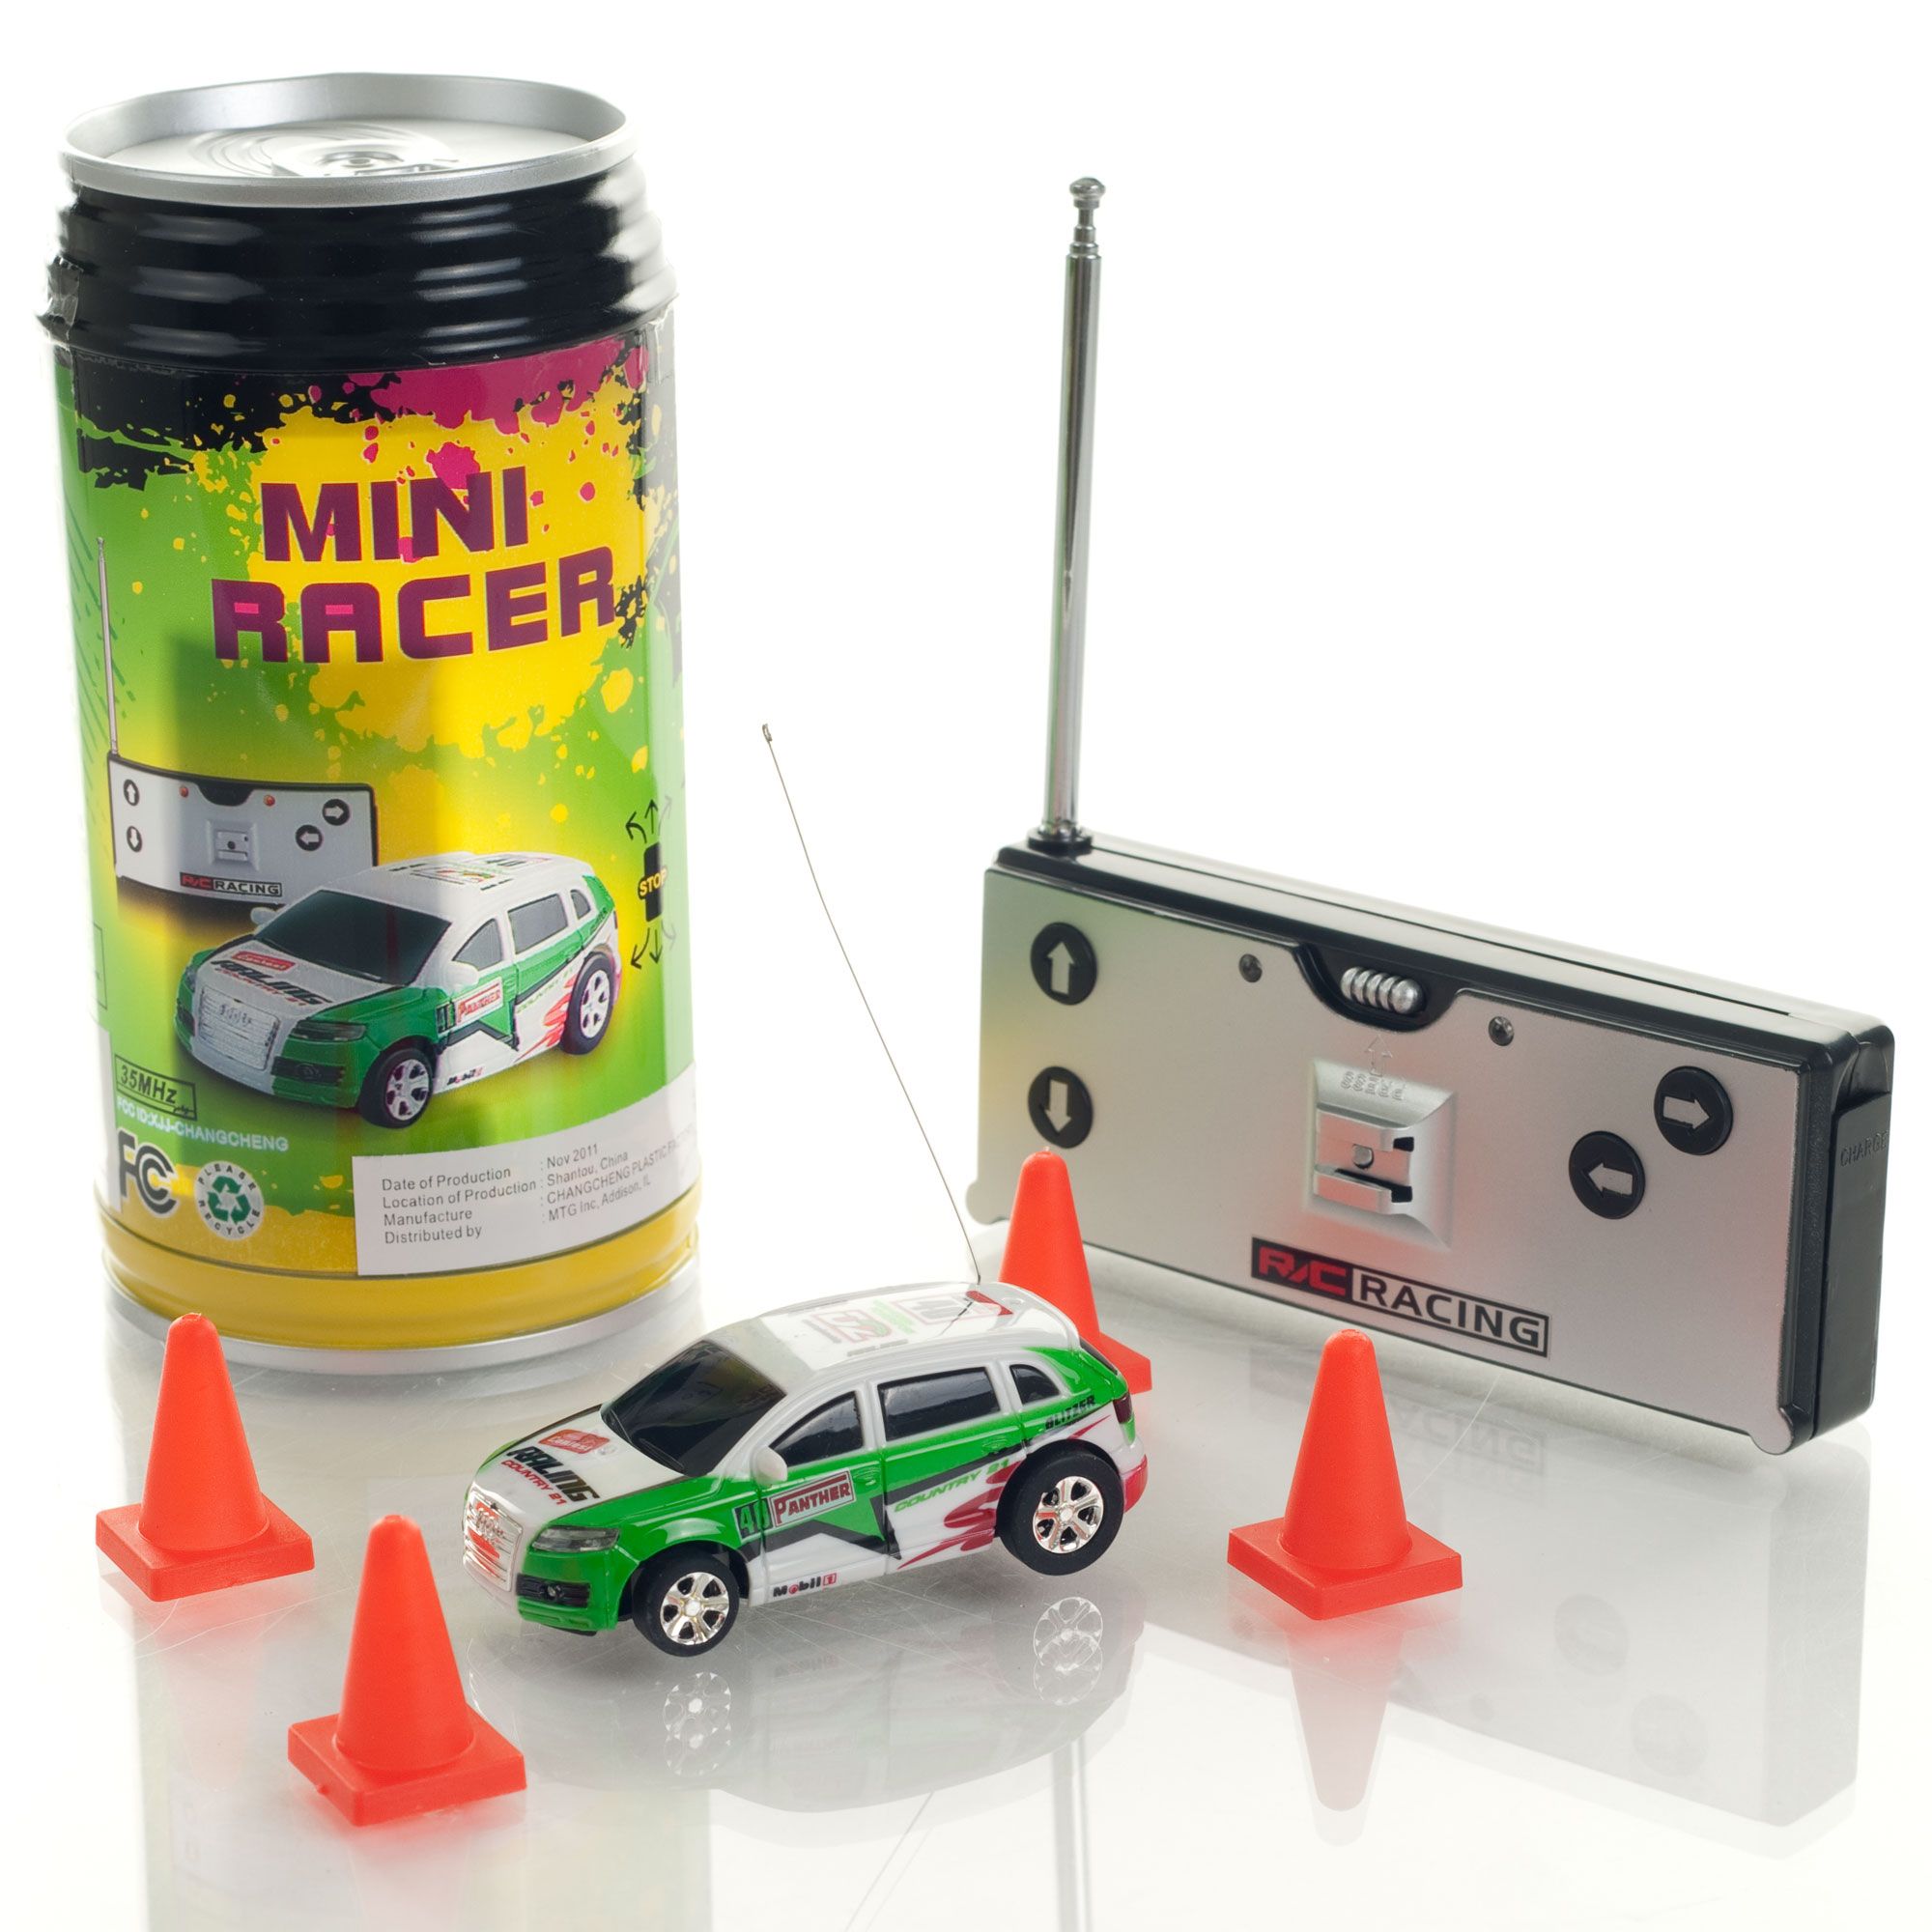 Mini Racer Remote Control Car in a Can - Green